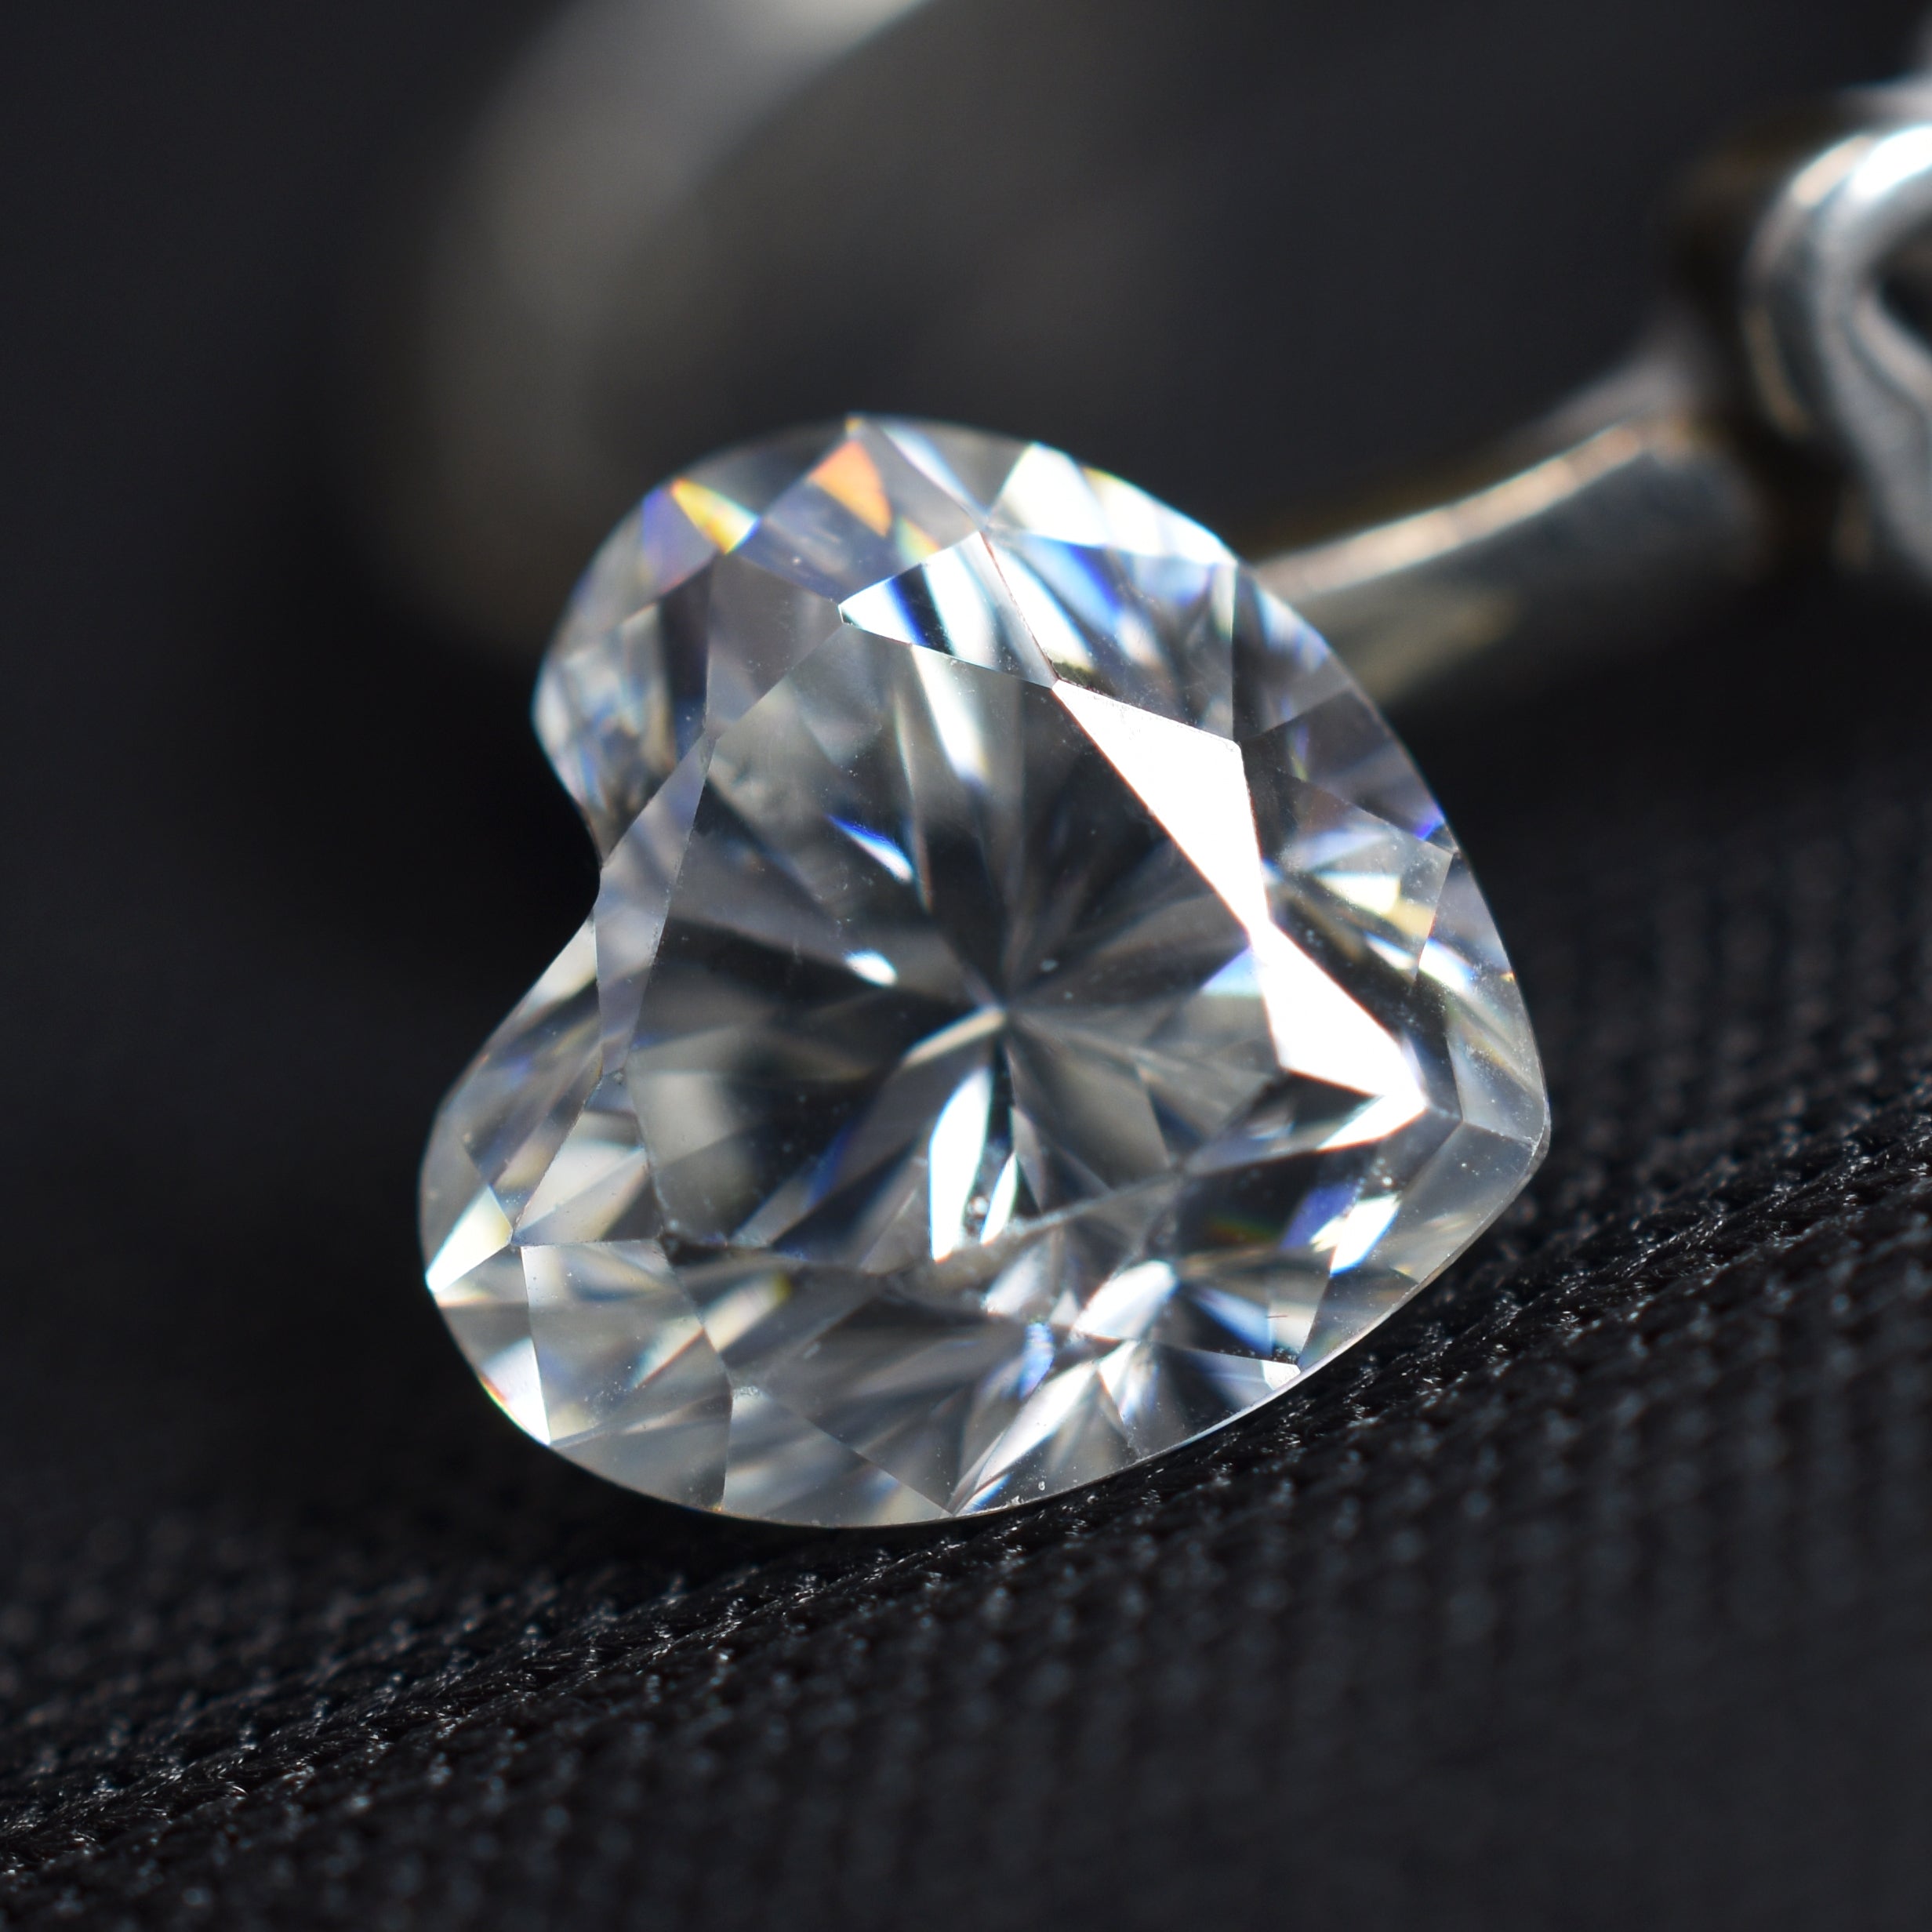 Jewelry Making Moissanite Gem 6 MM VVS1 D Color CERTIFIED 1.40 Carat Heart Cut Moissanite Loose Gemstone A++ Quality Moissanite Gems